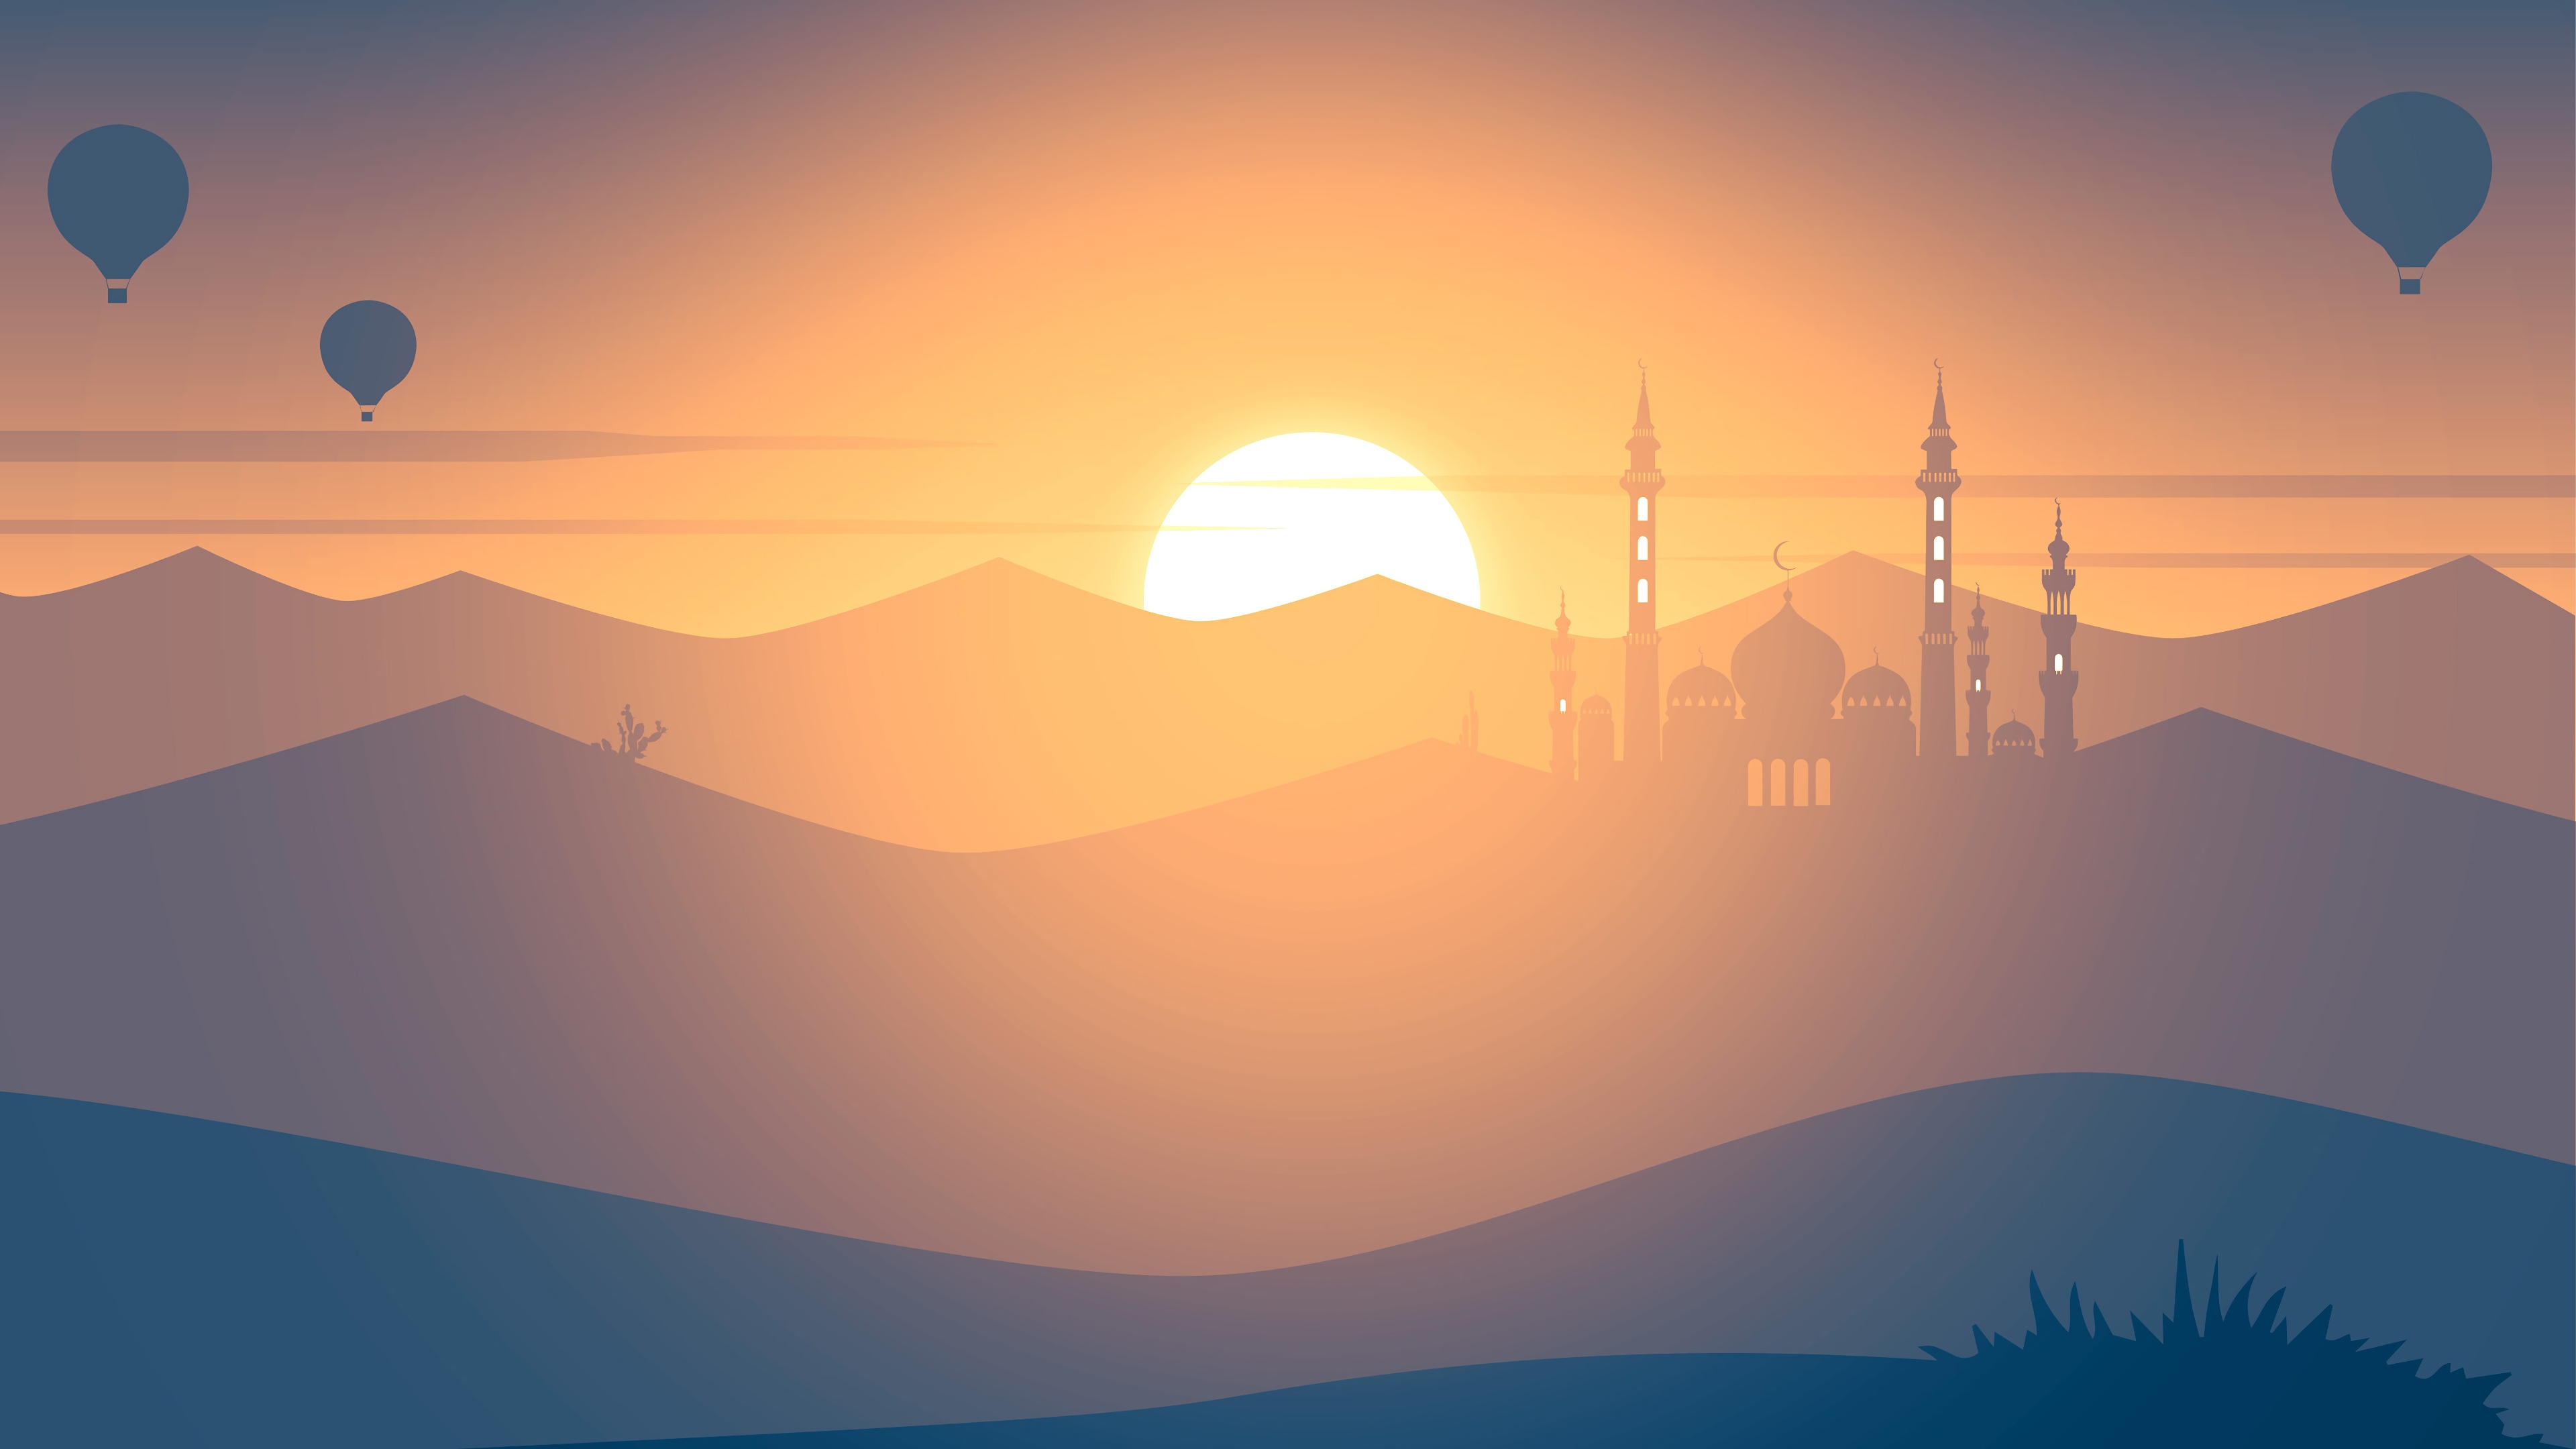 General 3840x2160 digital art landscape mosque sunset mountains minimalism illustration hot air balloons